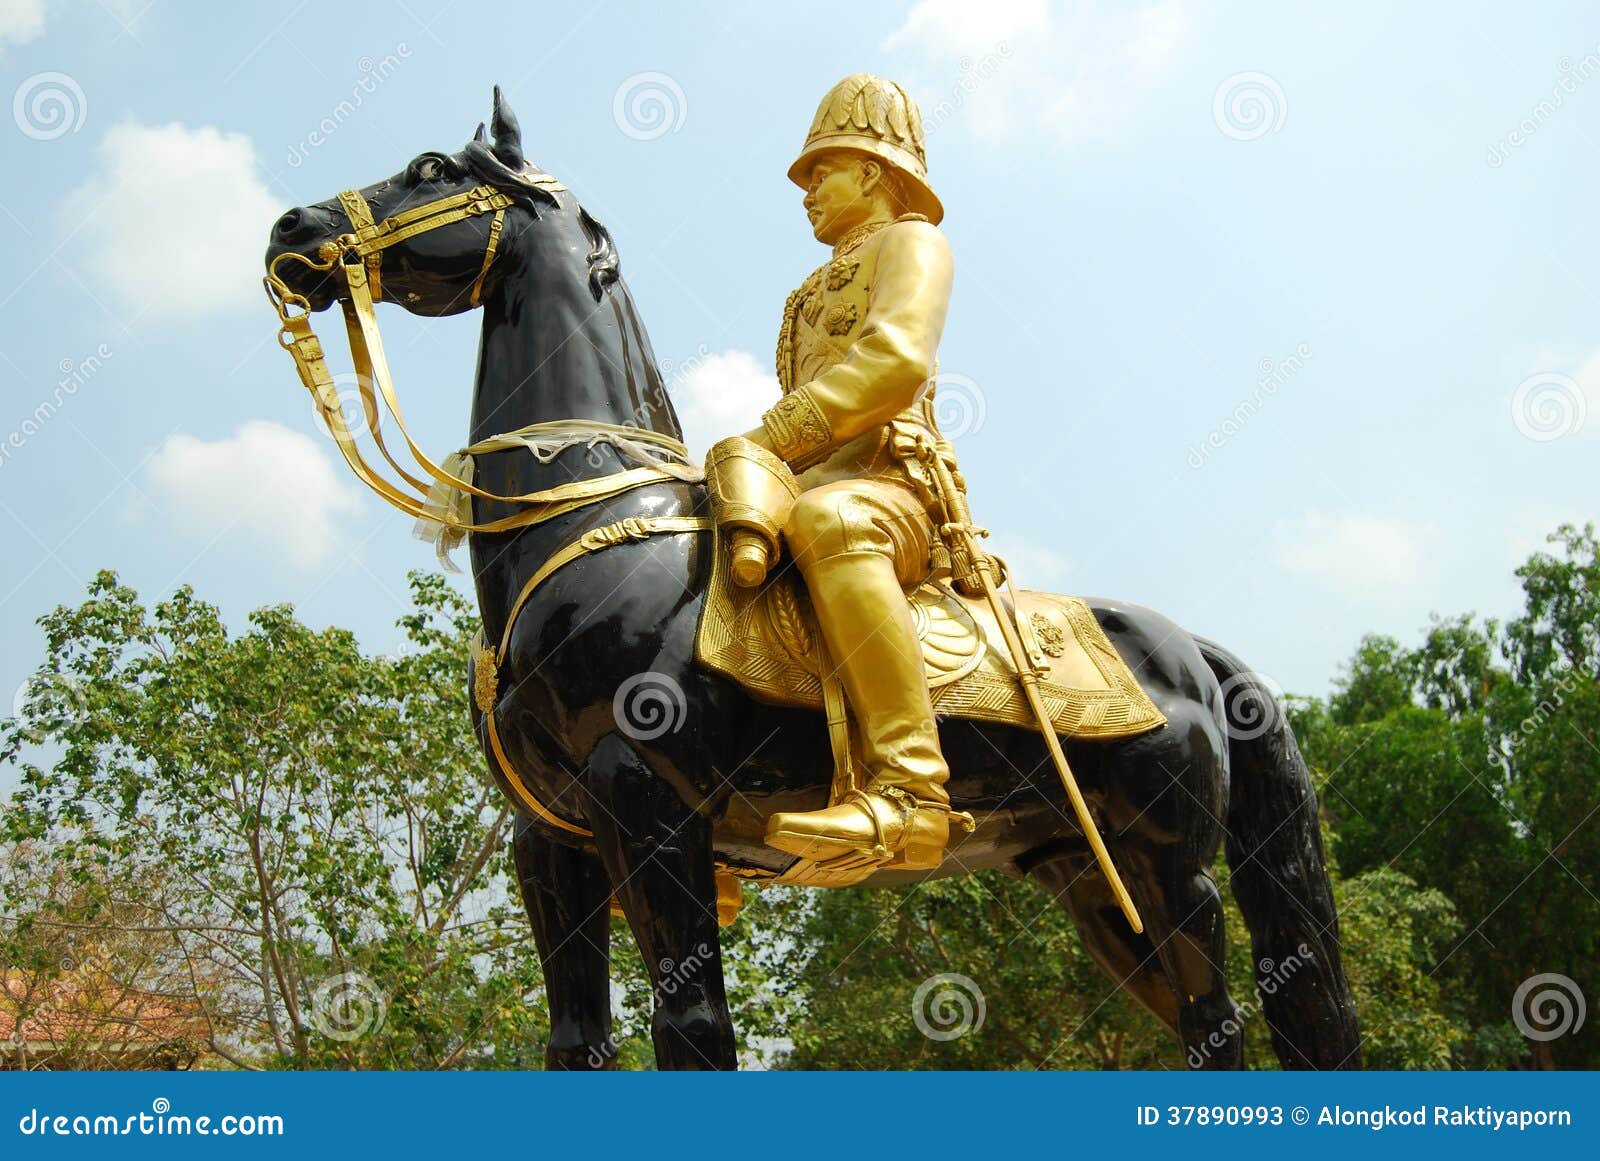 Majestata królewiątko Chulalongkorn. Statua Majestatyczny królewiątko Chulalongkorn.